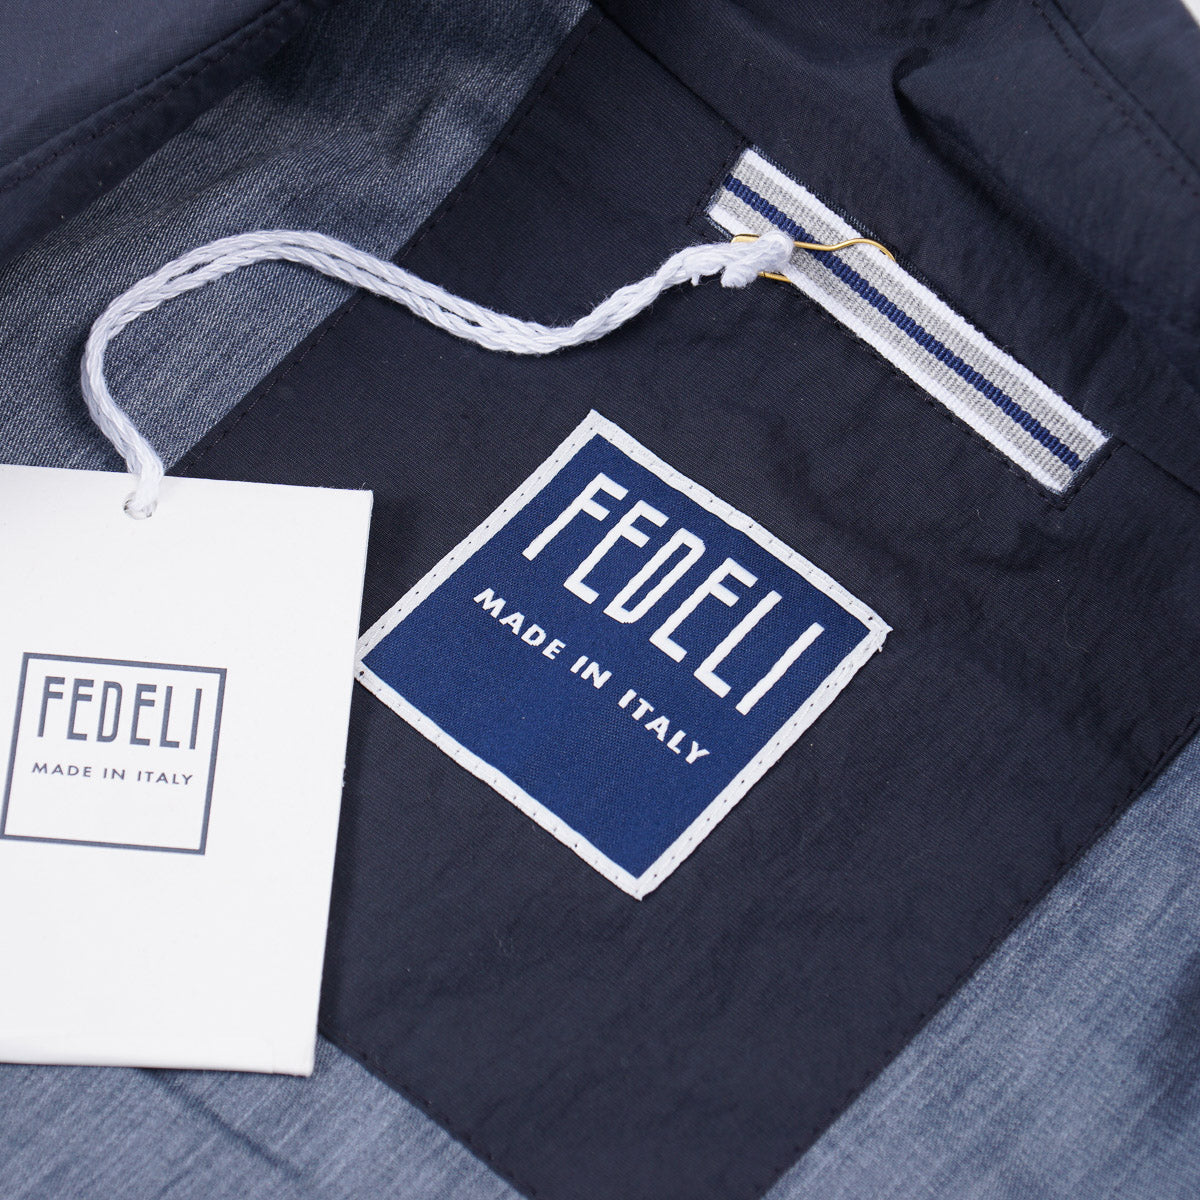 Fedeli Lightweight Technical Overcoat - Top Shelf Apparel